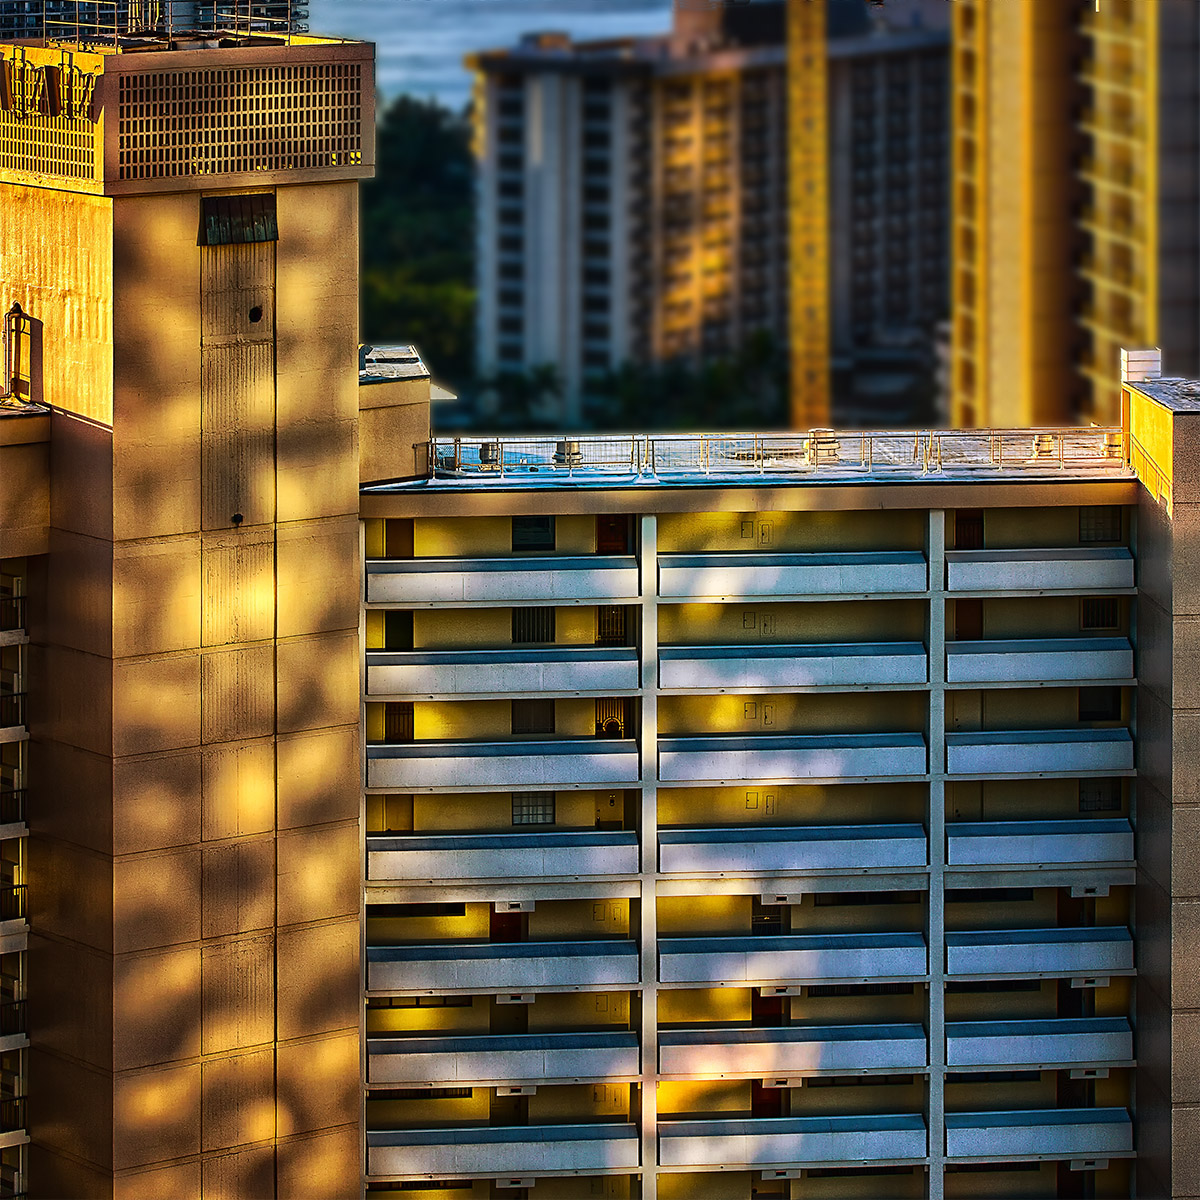 Seven Balconies on a Sun-dappled Building